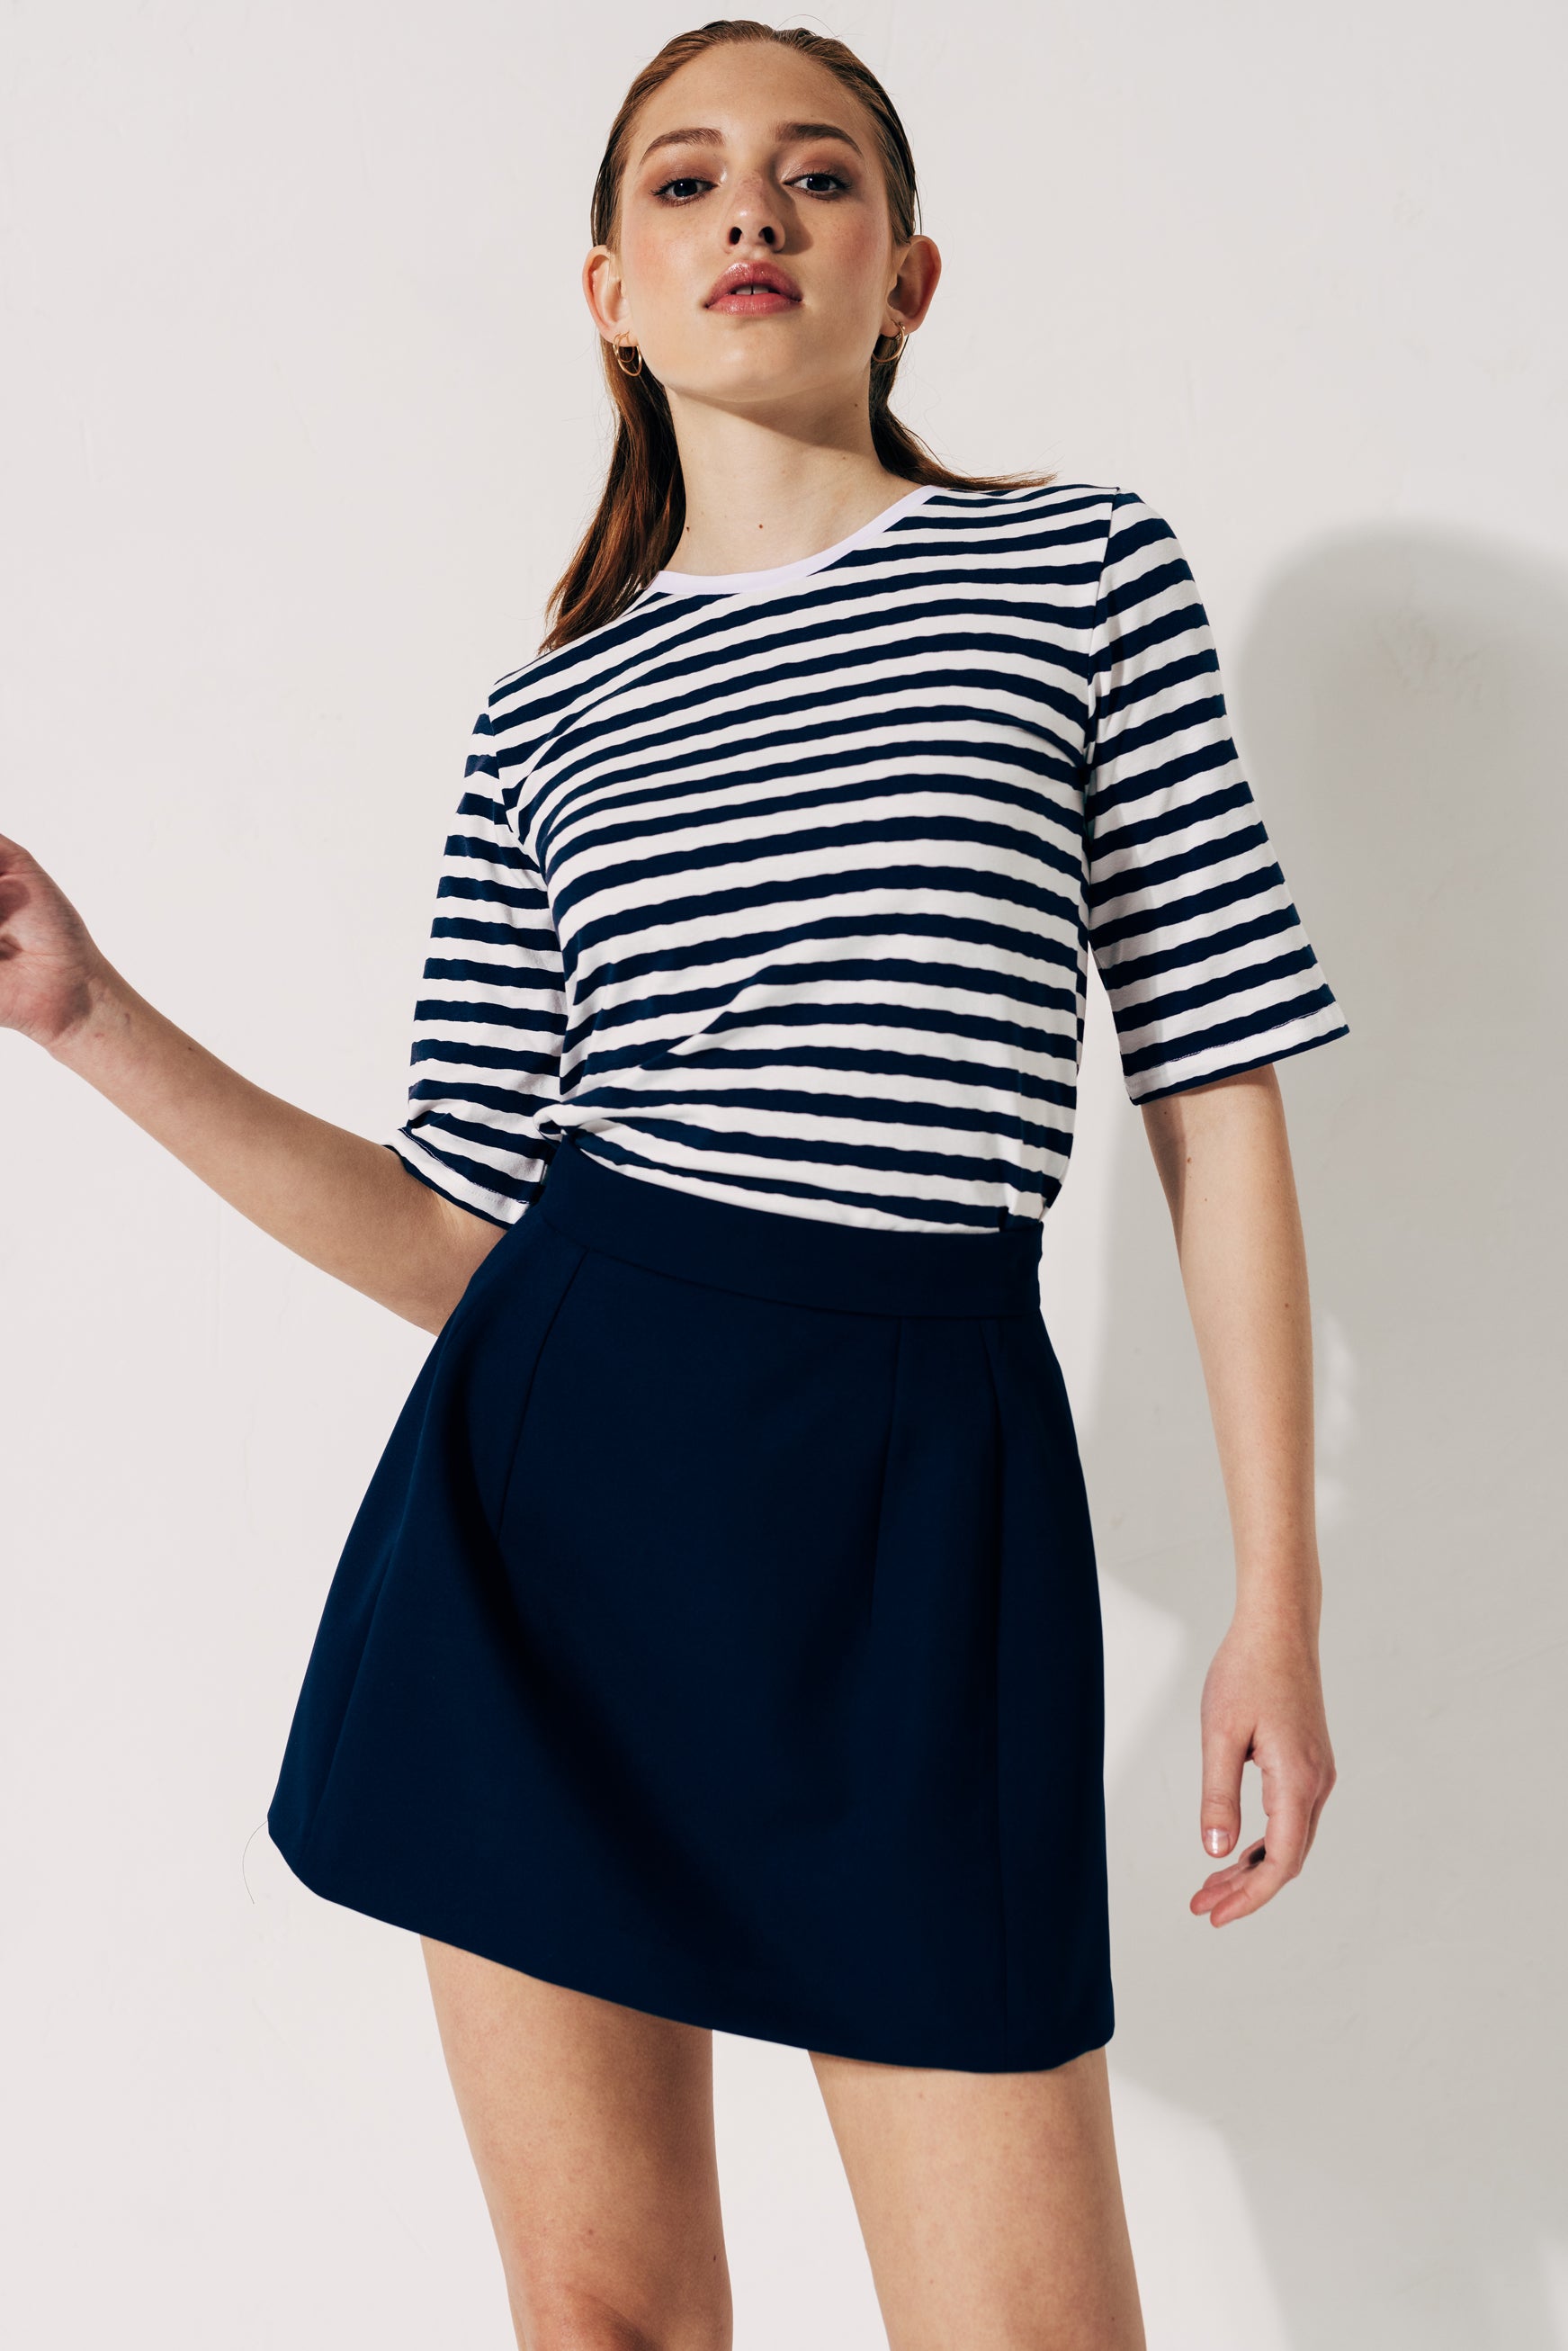 High-waist short skirt in dark navy blue